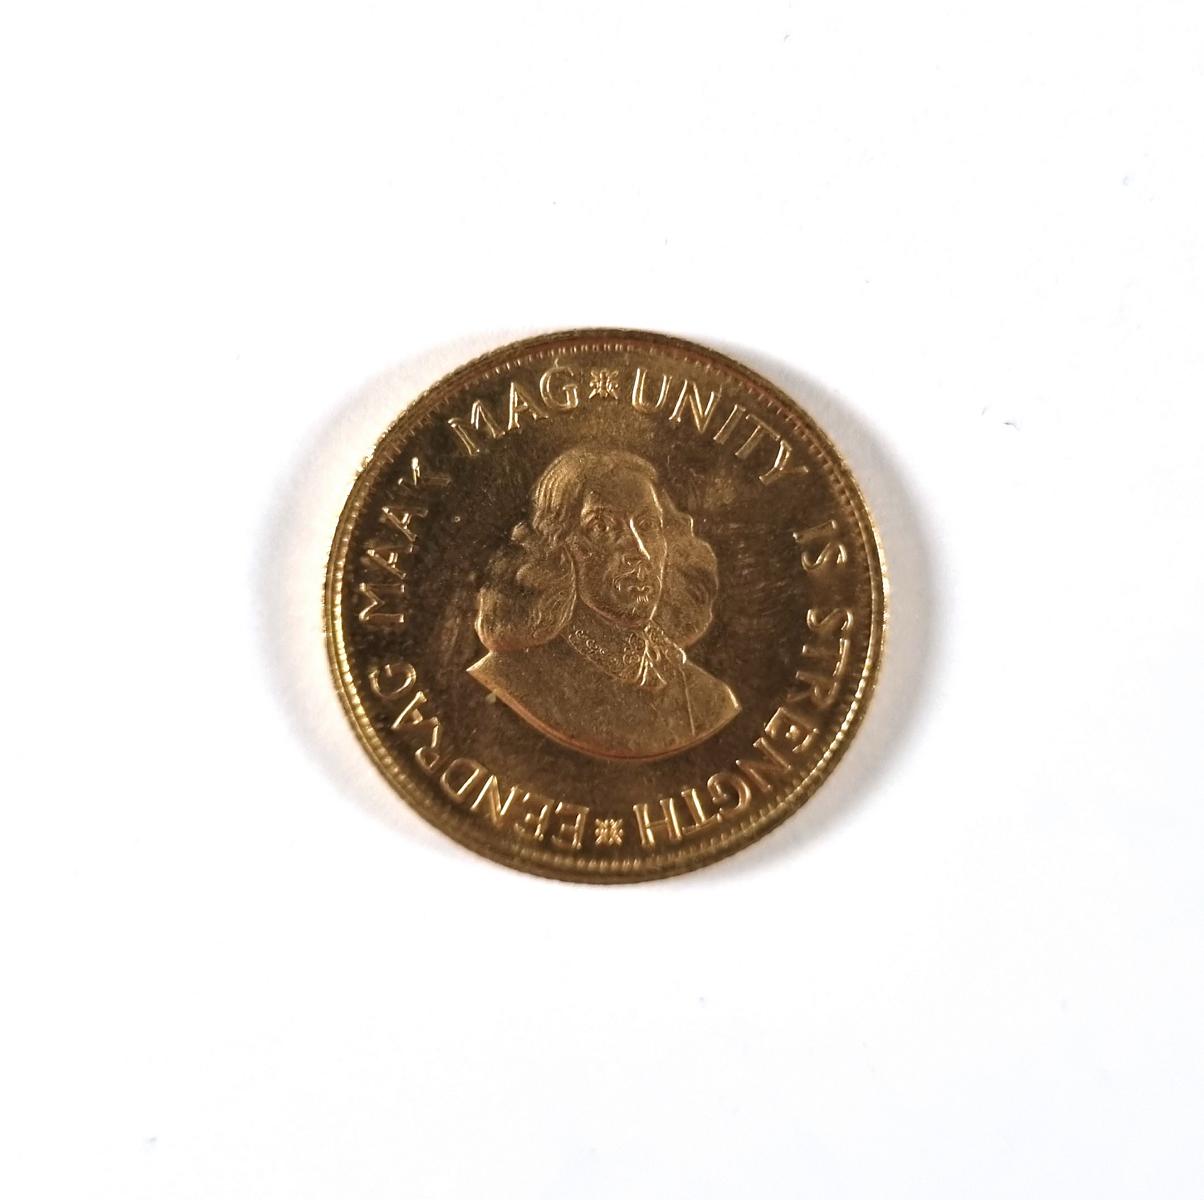 Südafrika, 2 Rand Goldmünze 1974